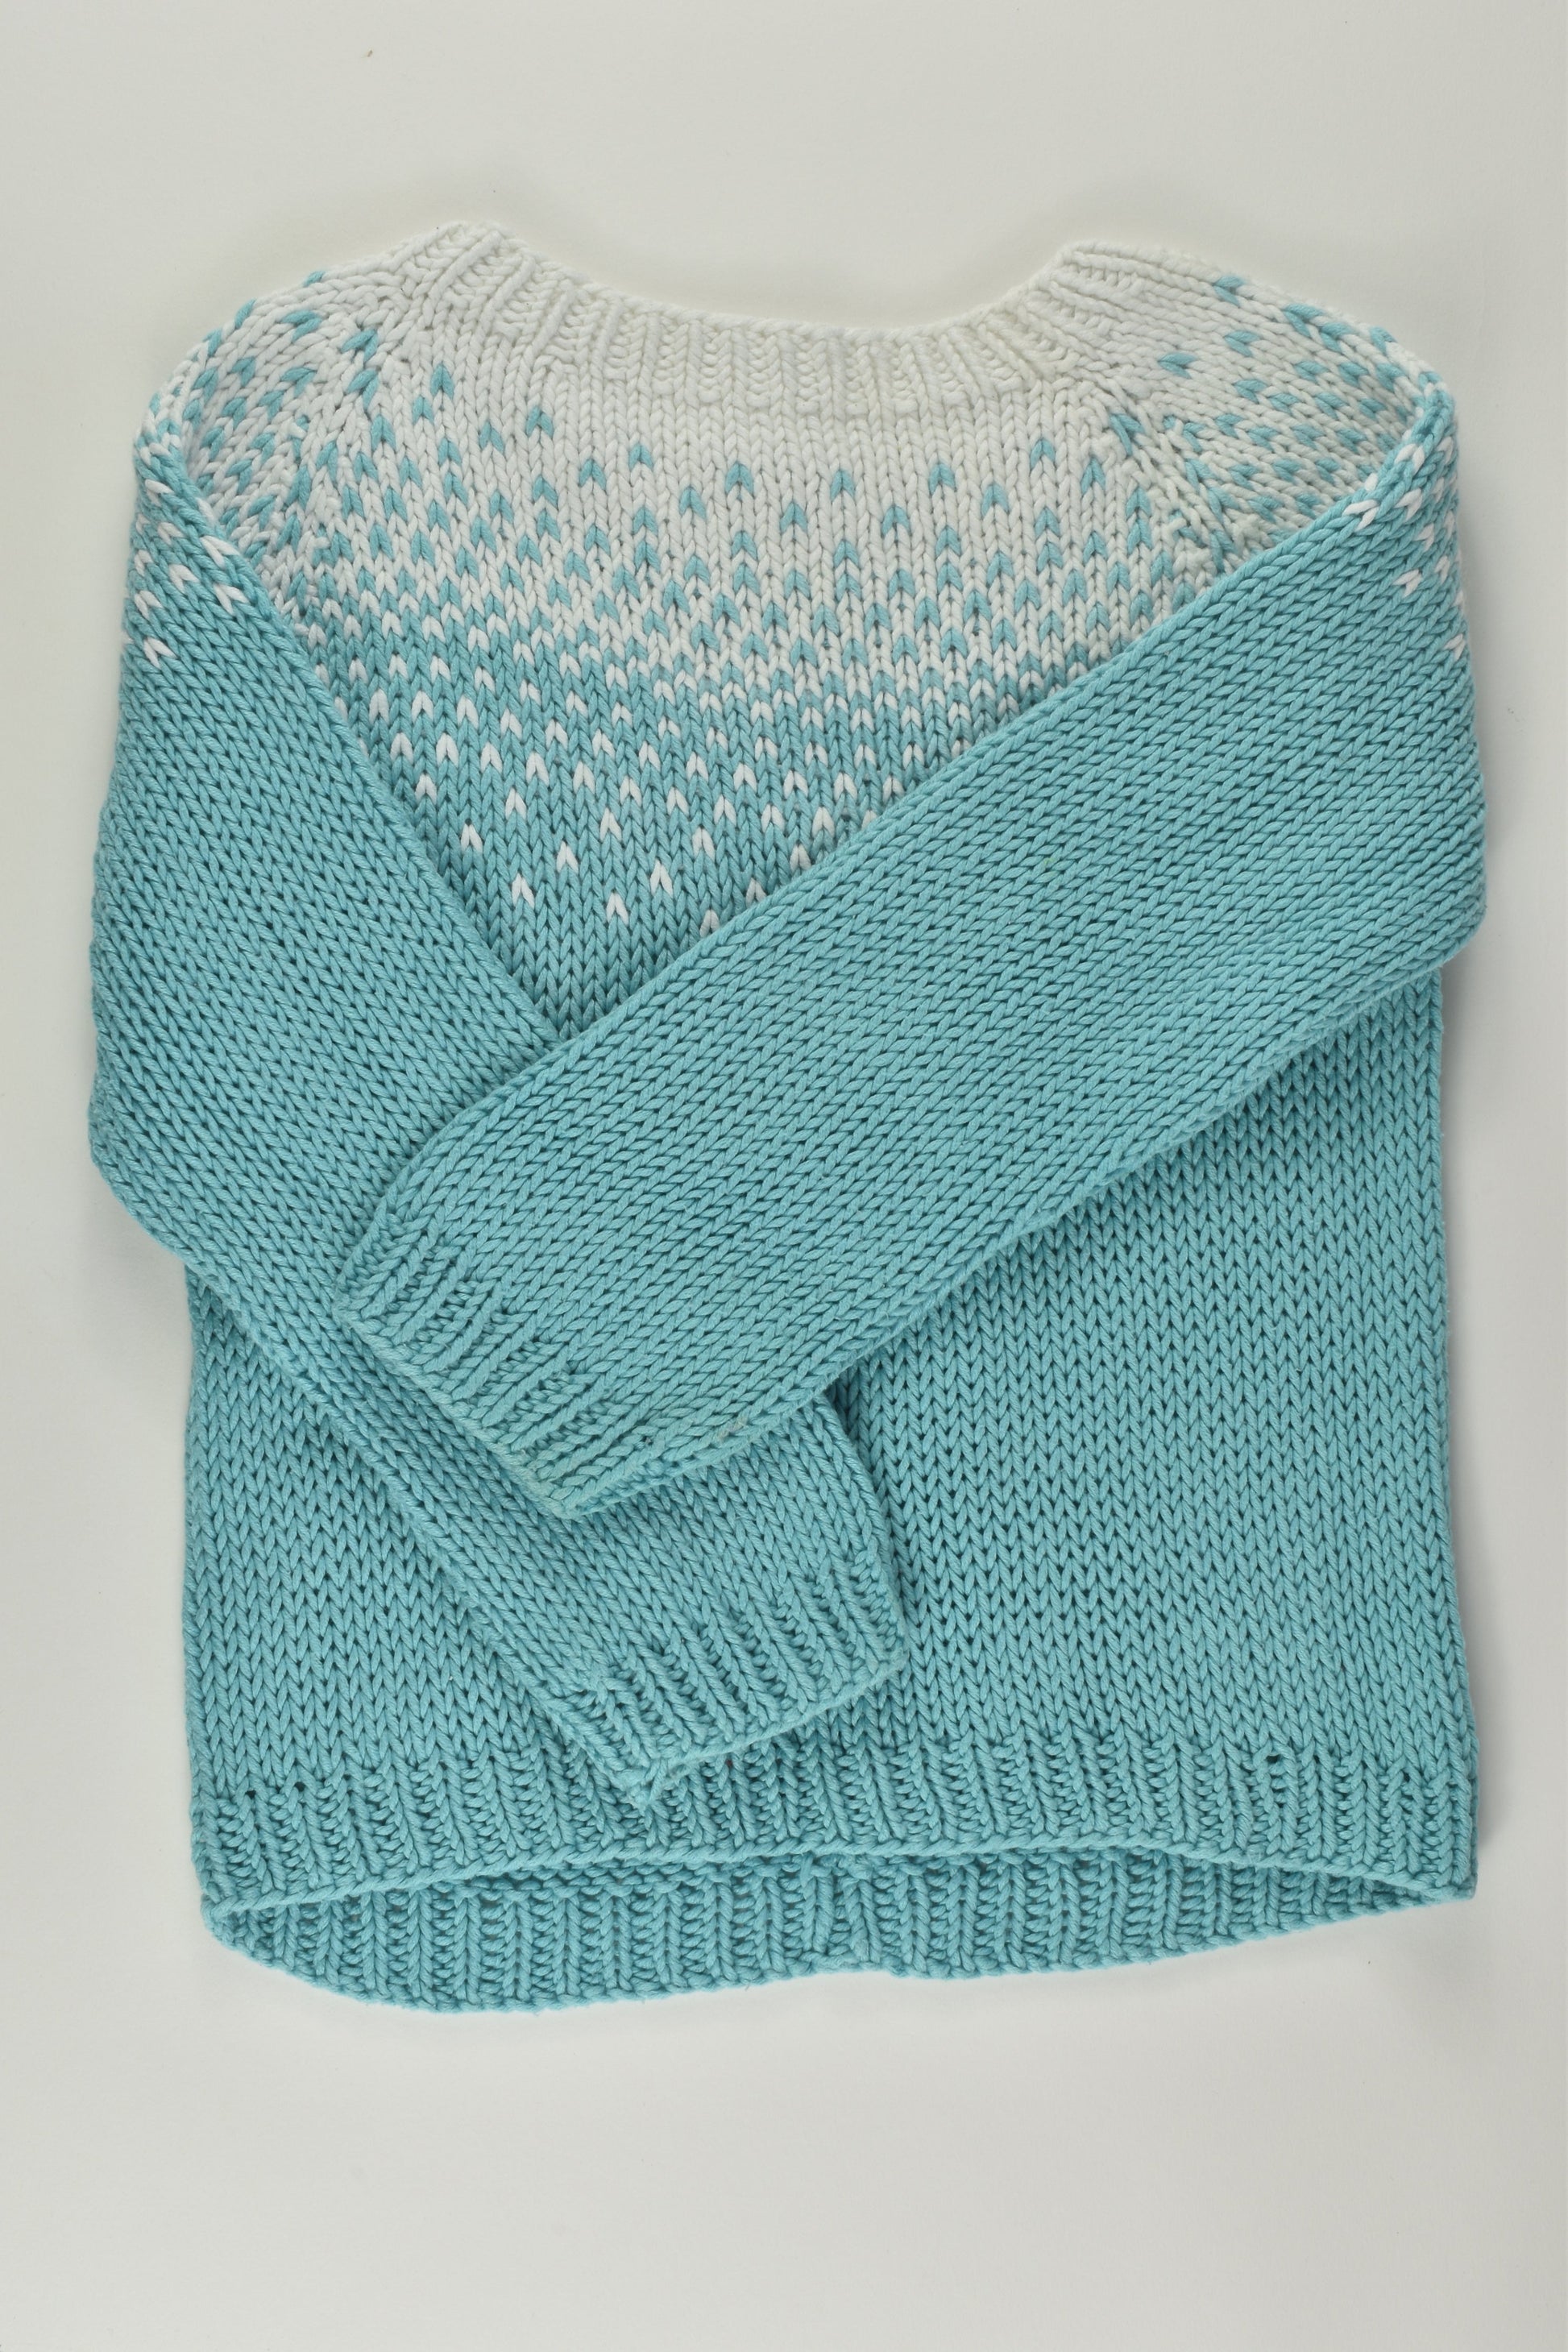 Handmade Size 4 Knit Cotton Jumper